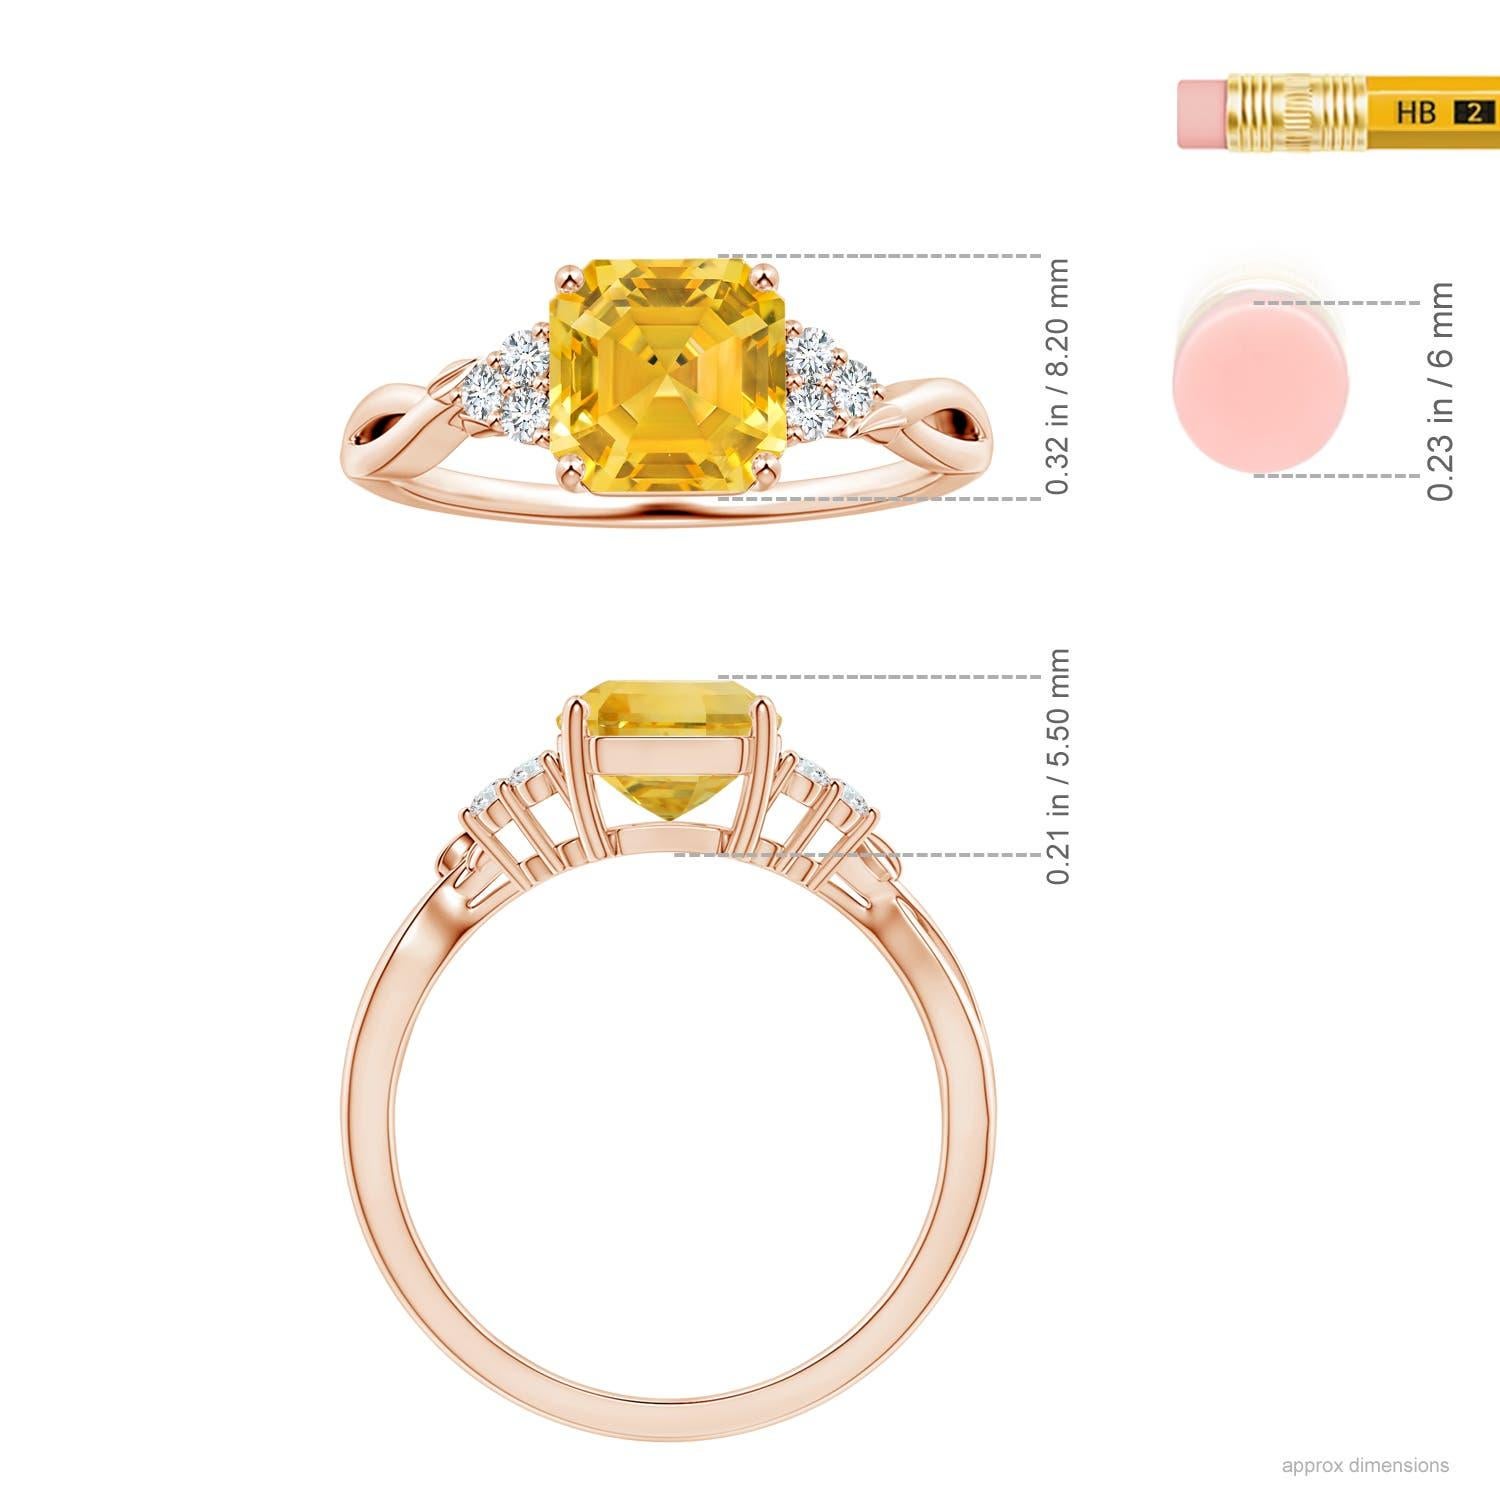 En vente :  Angara Gia Bague en or rose avec saphir jaune taille émeraude et diamants certifiés 5